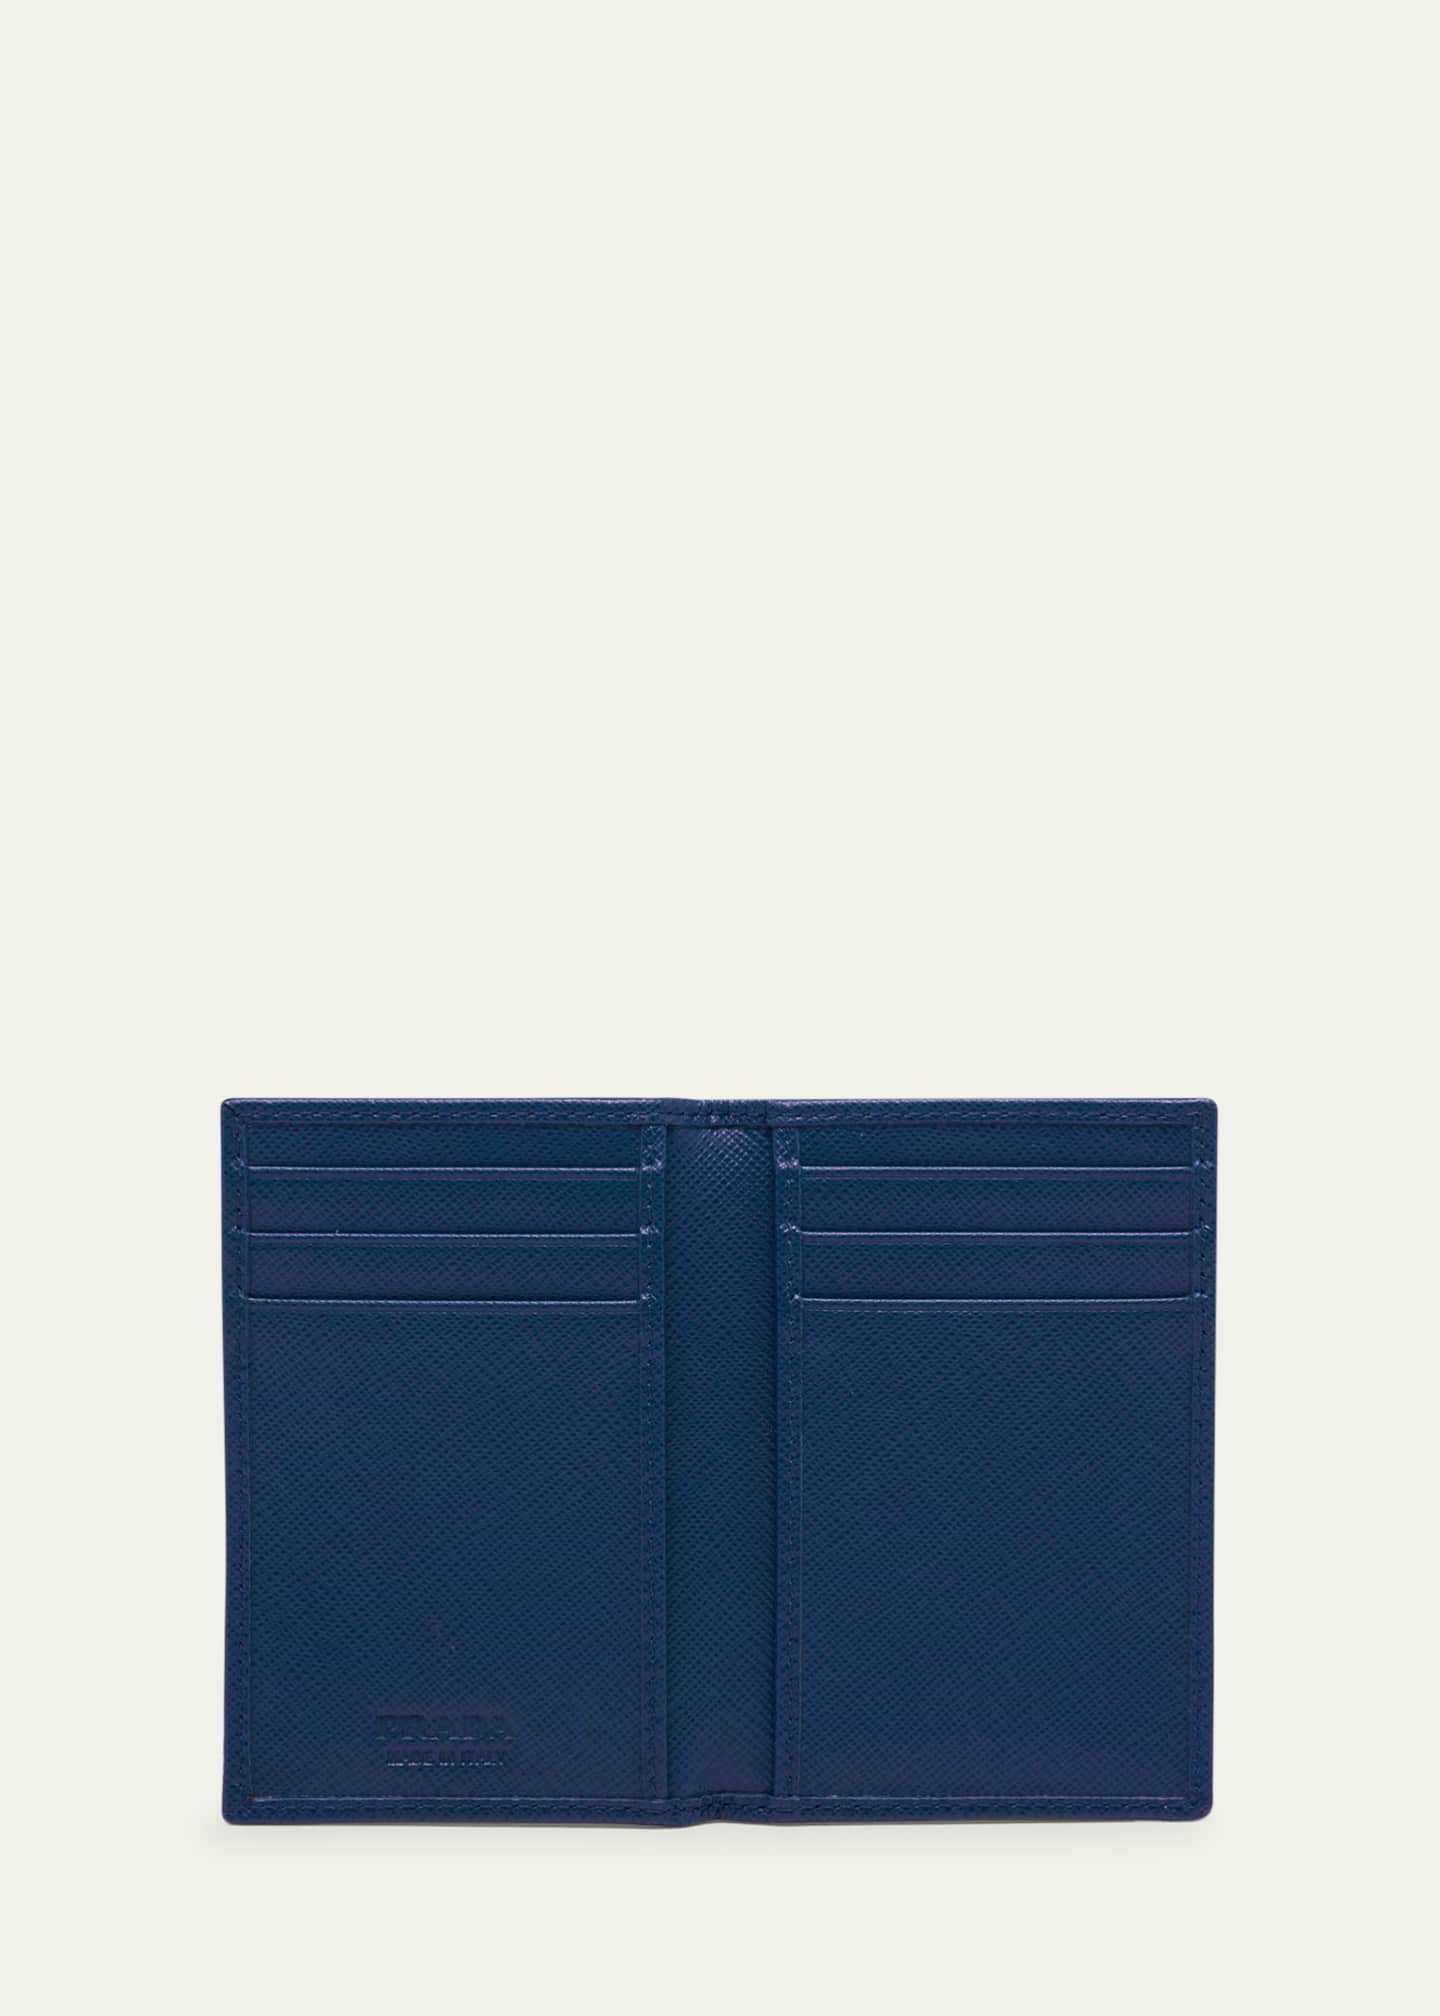 Prada Nero Saffiano Money Clip Wallet, Designer Brand